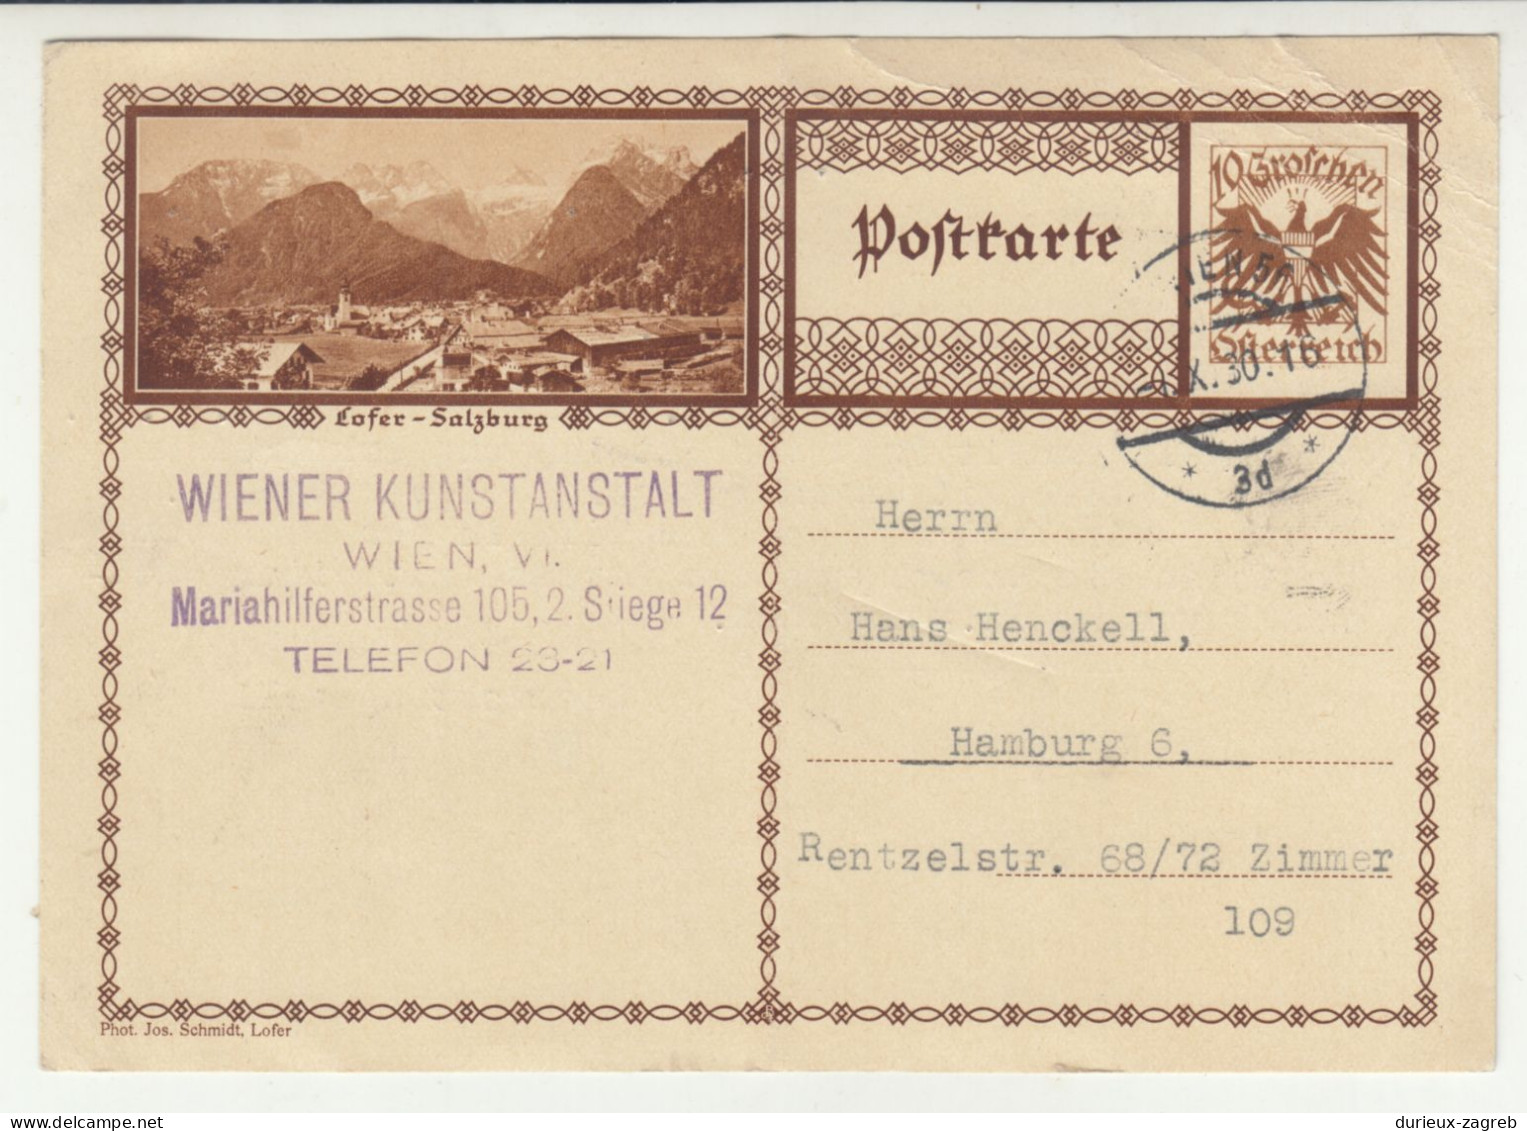 Lofer-Salzburg Illustrated Postal Stationery Postcard Posted 1930 B240503 - Postkarten